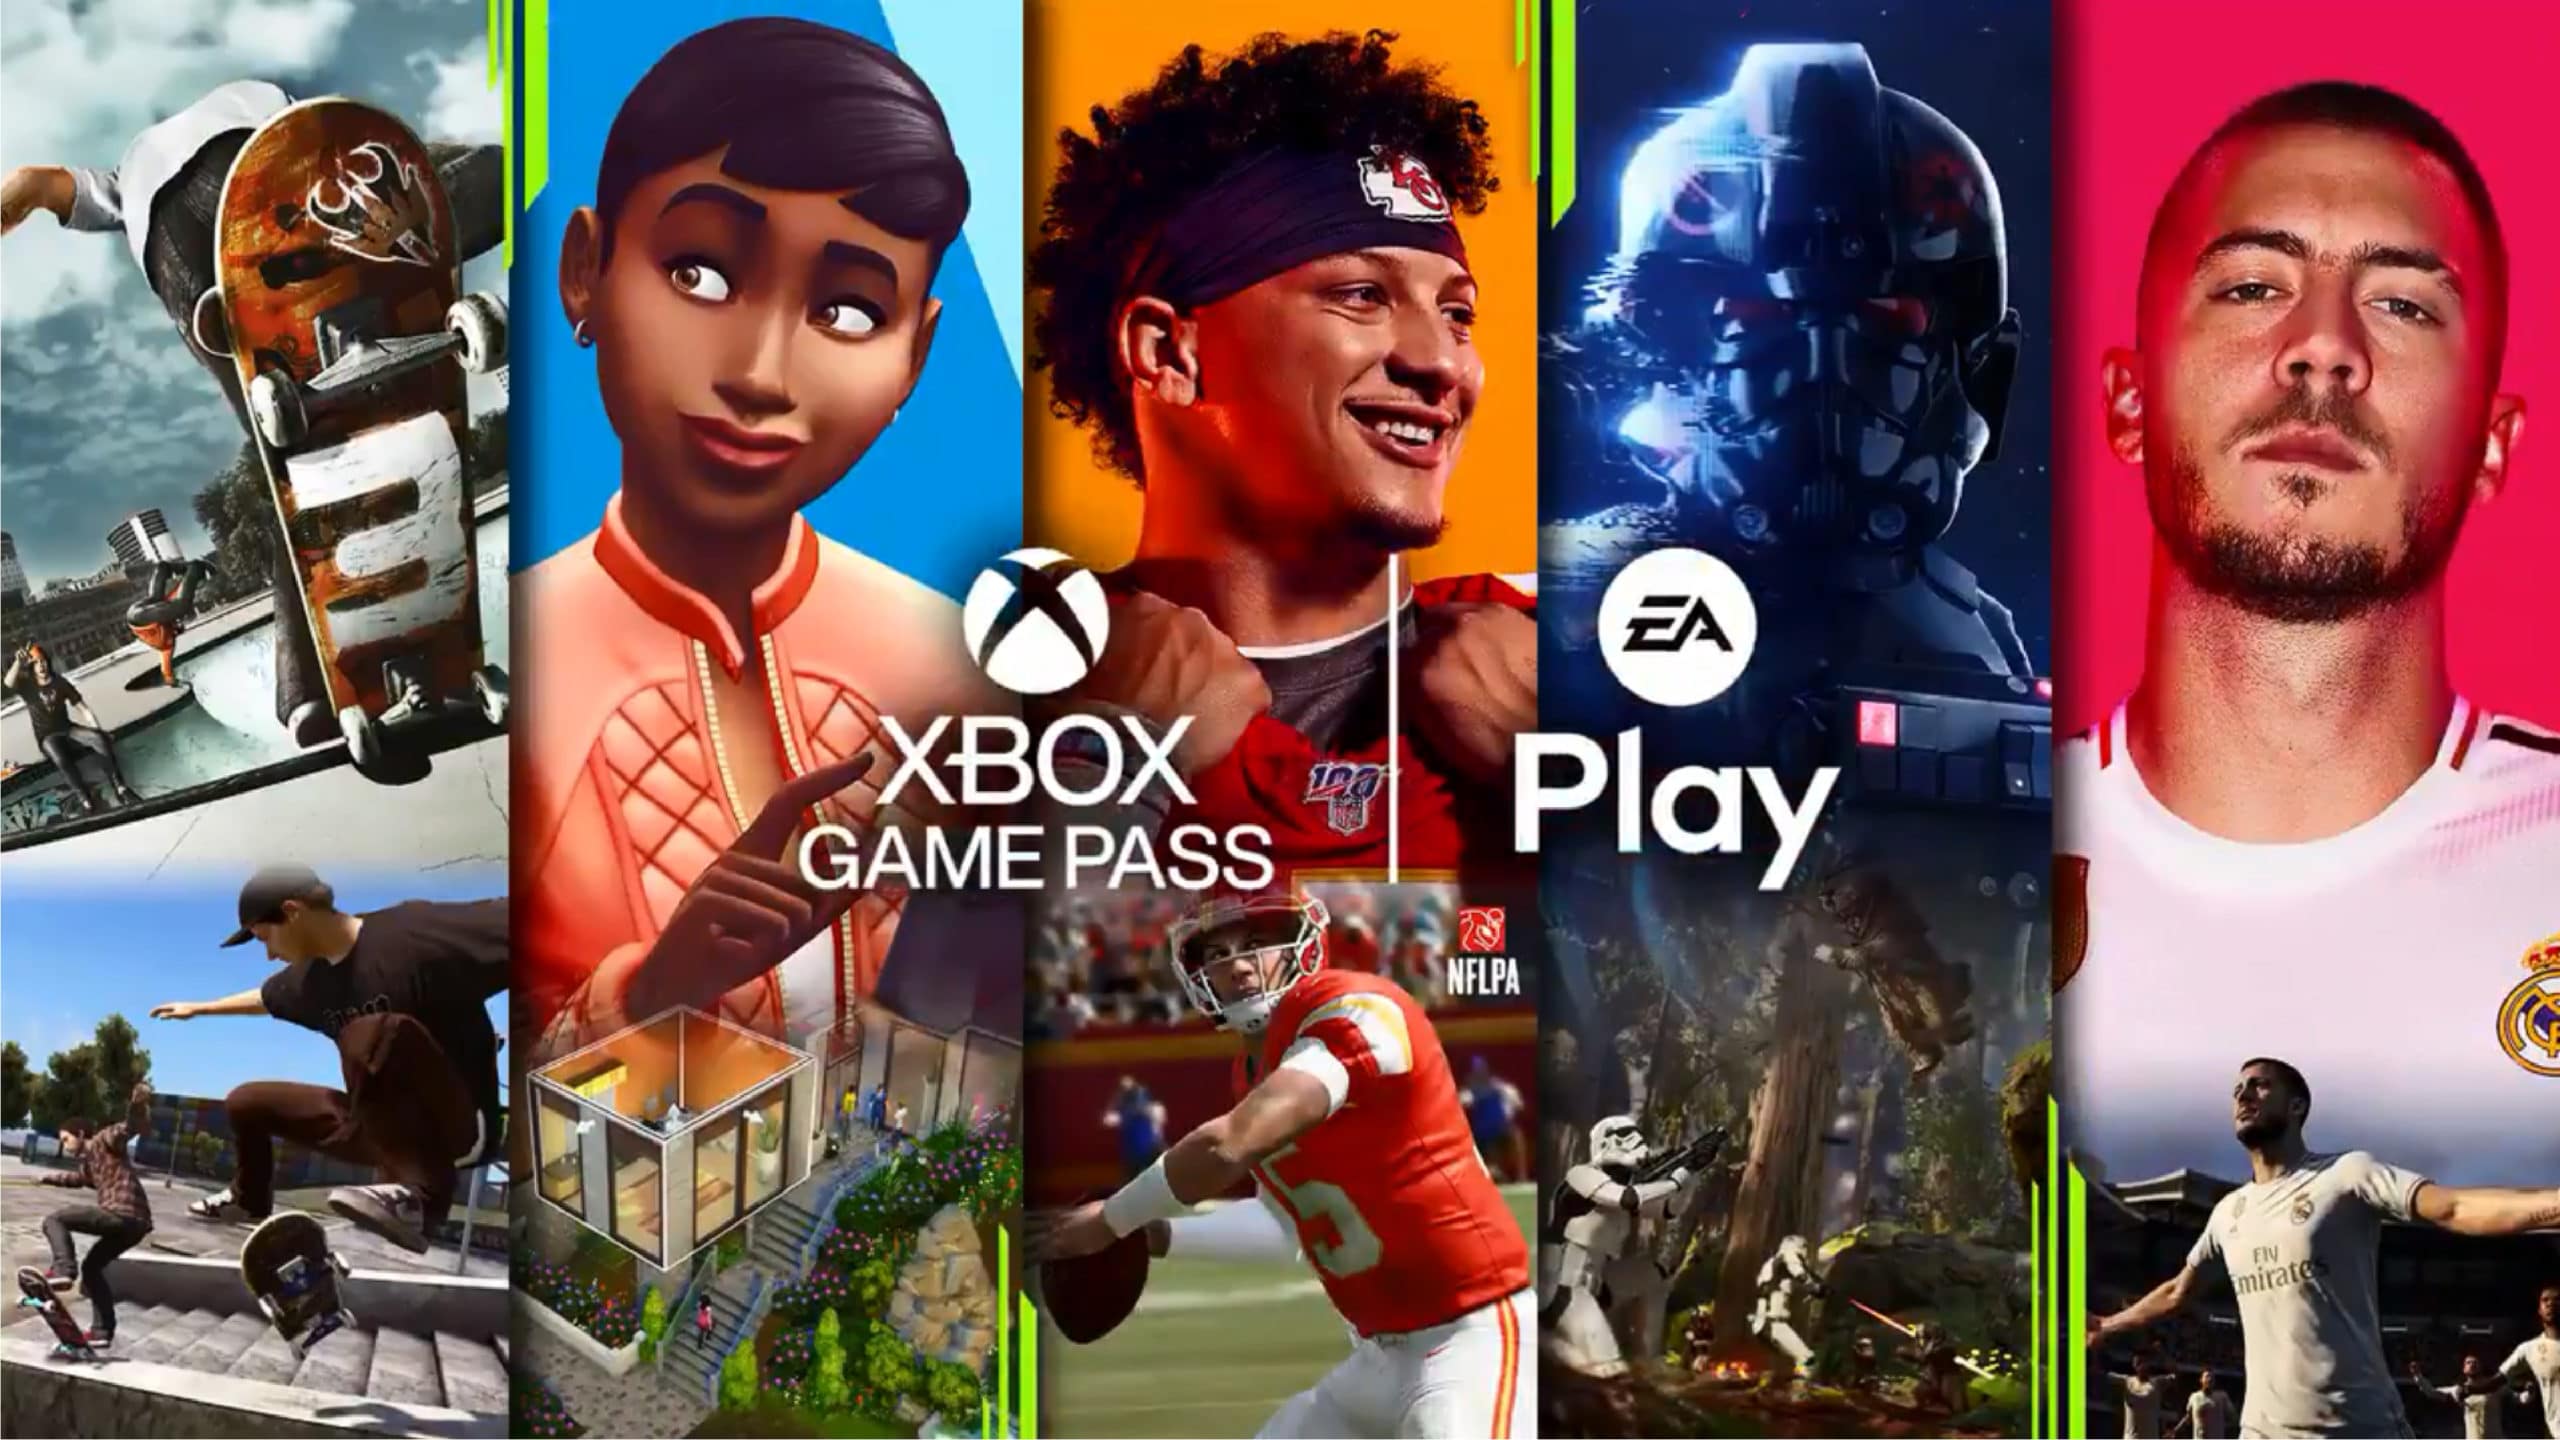 Xbox Game Pass agregará a EA’s Play a su servicio sin costo adicional